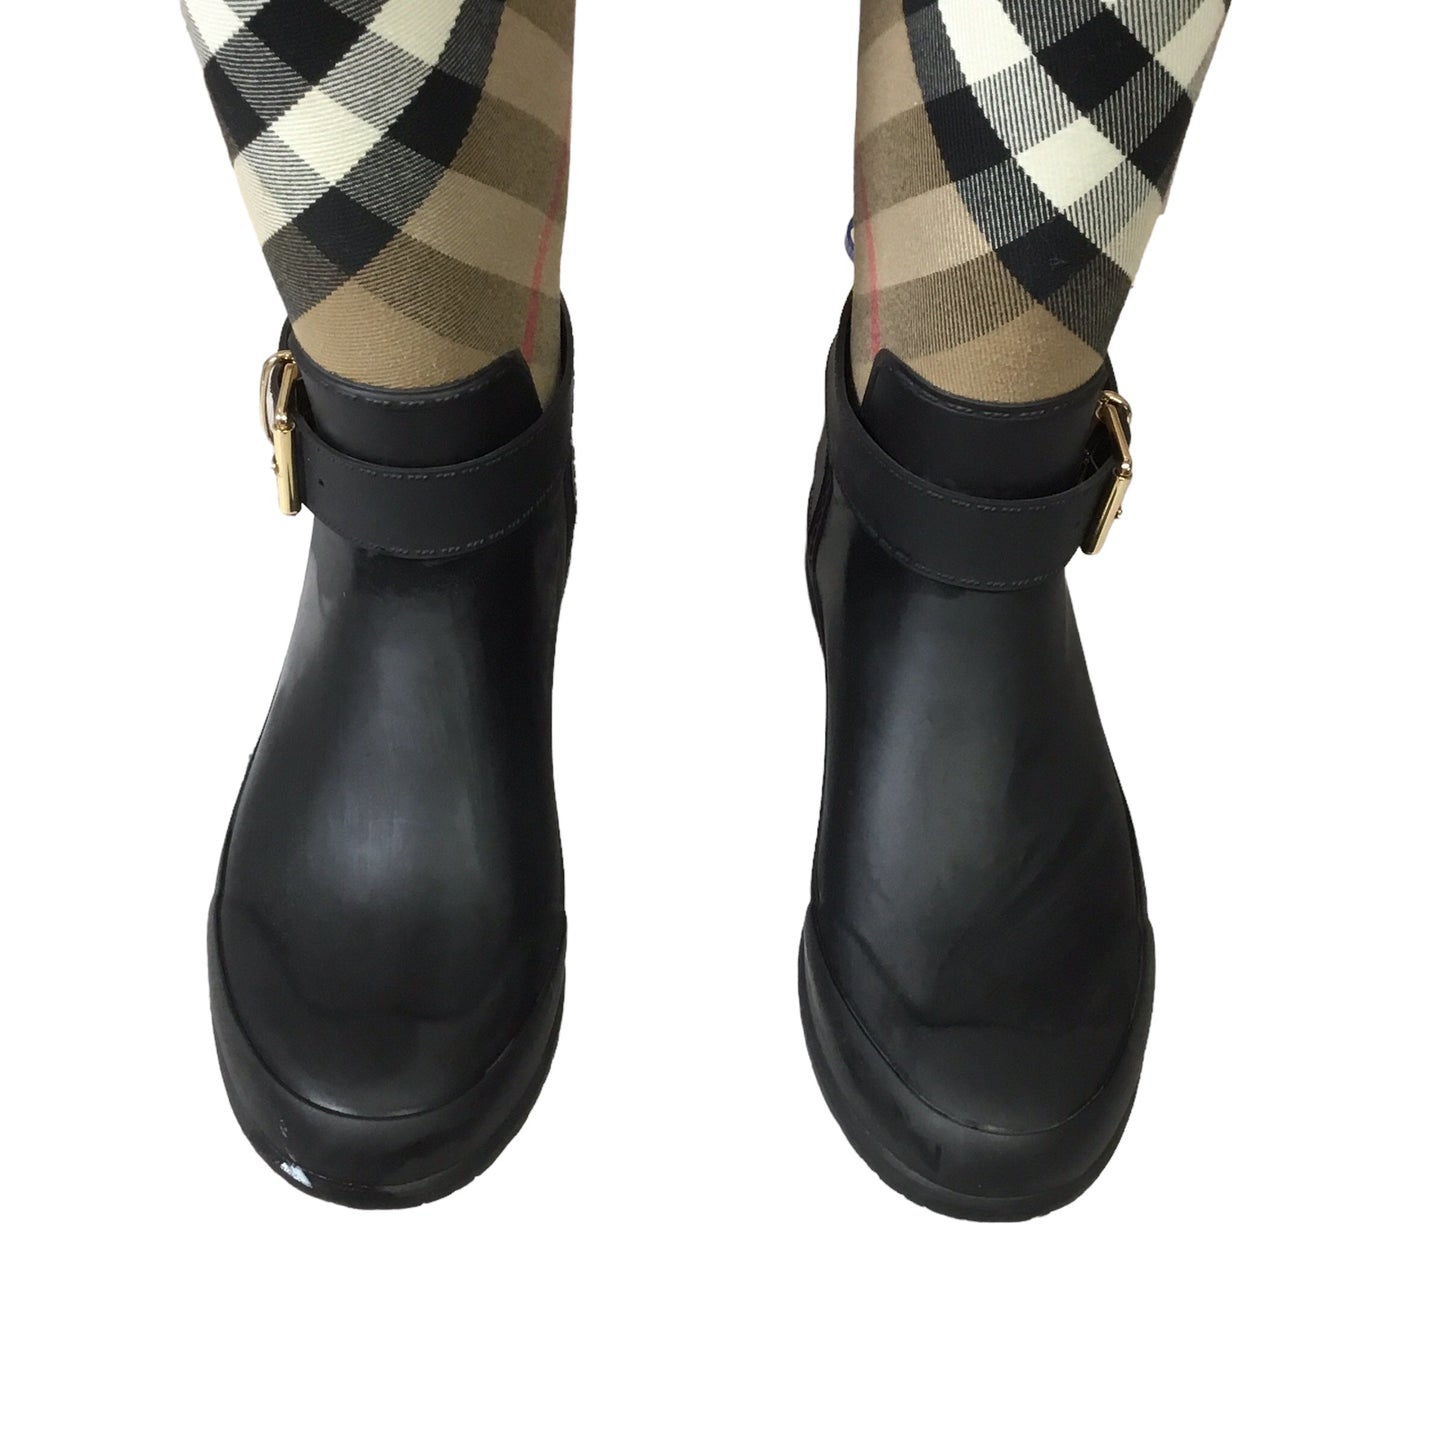 Plaid Pattern Boots Designer Burberry, Size 5